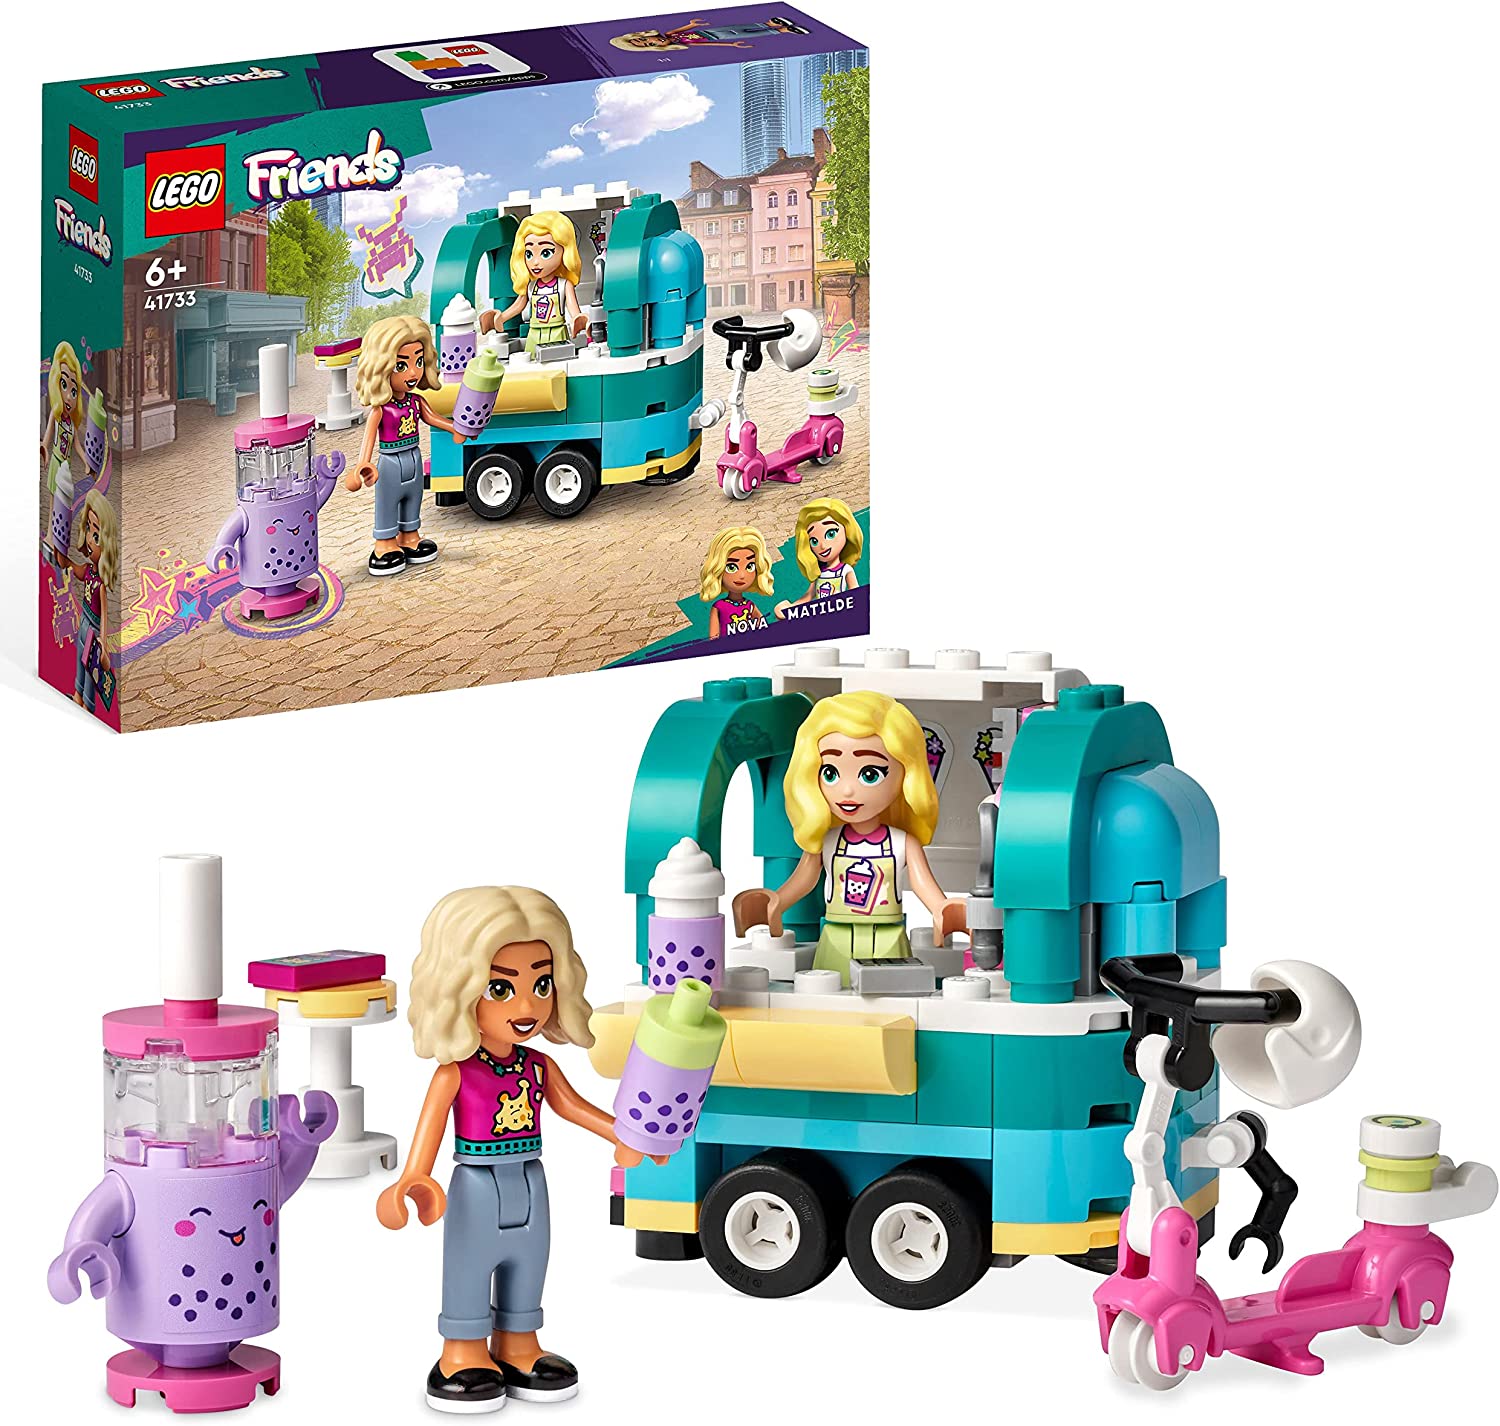 LEGO 41733 Friends Bubble Tea Mobile Construction Toy 41733 (5702017400150) bērnu rotaļlieta